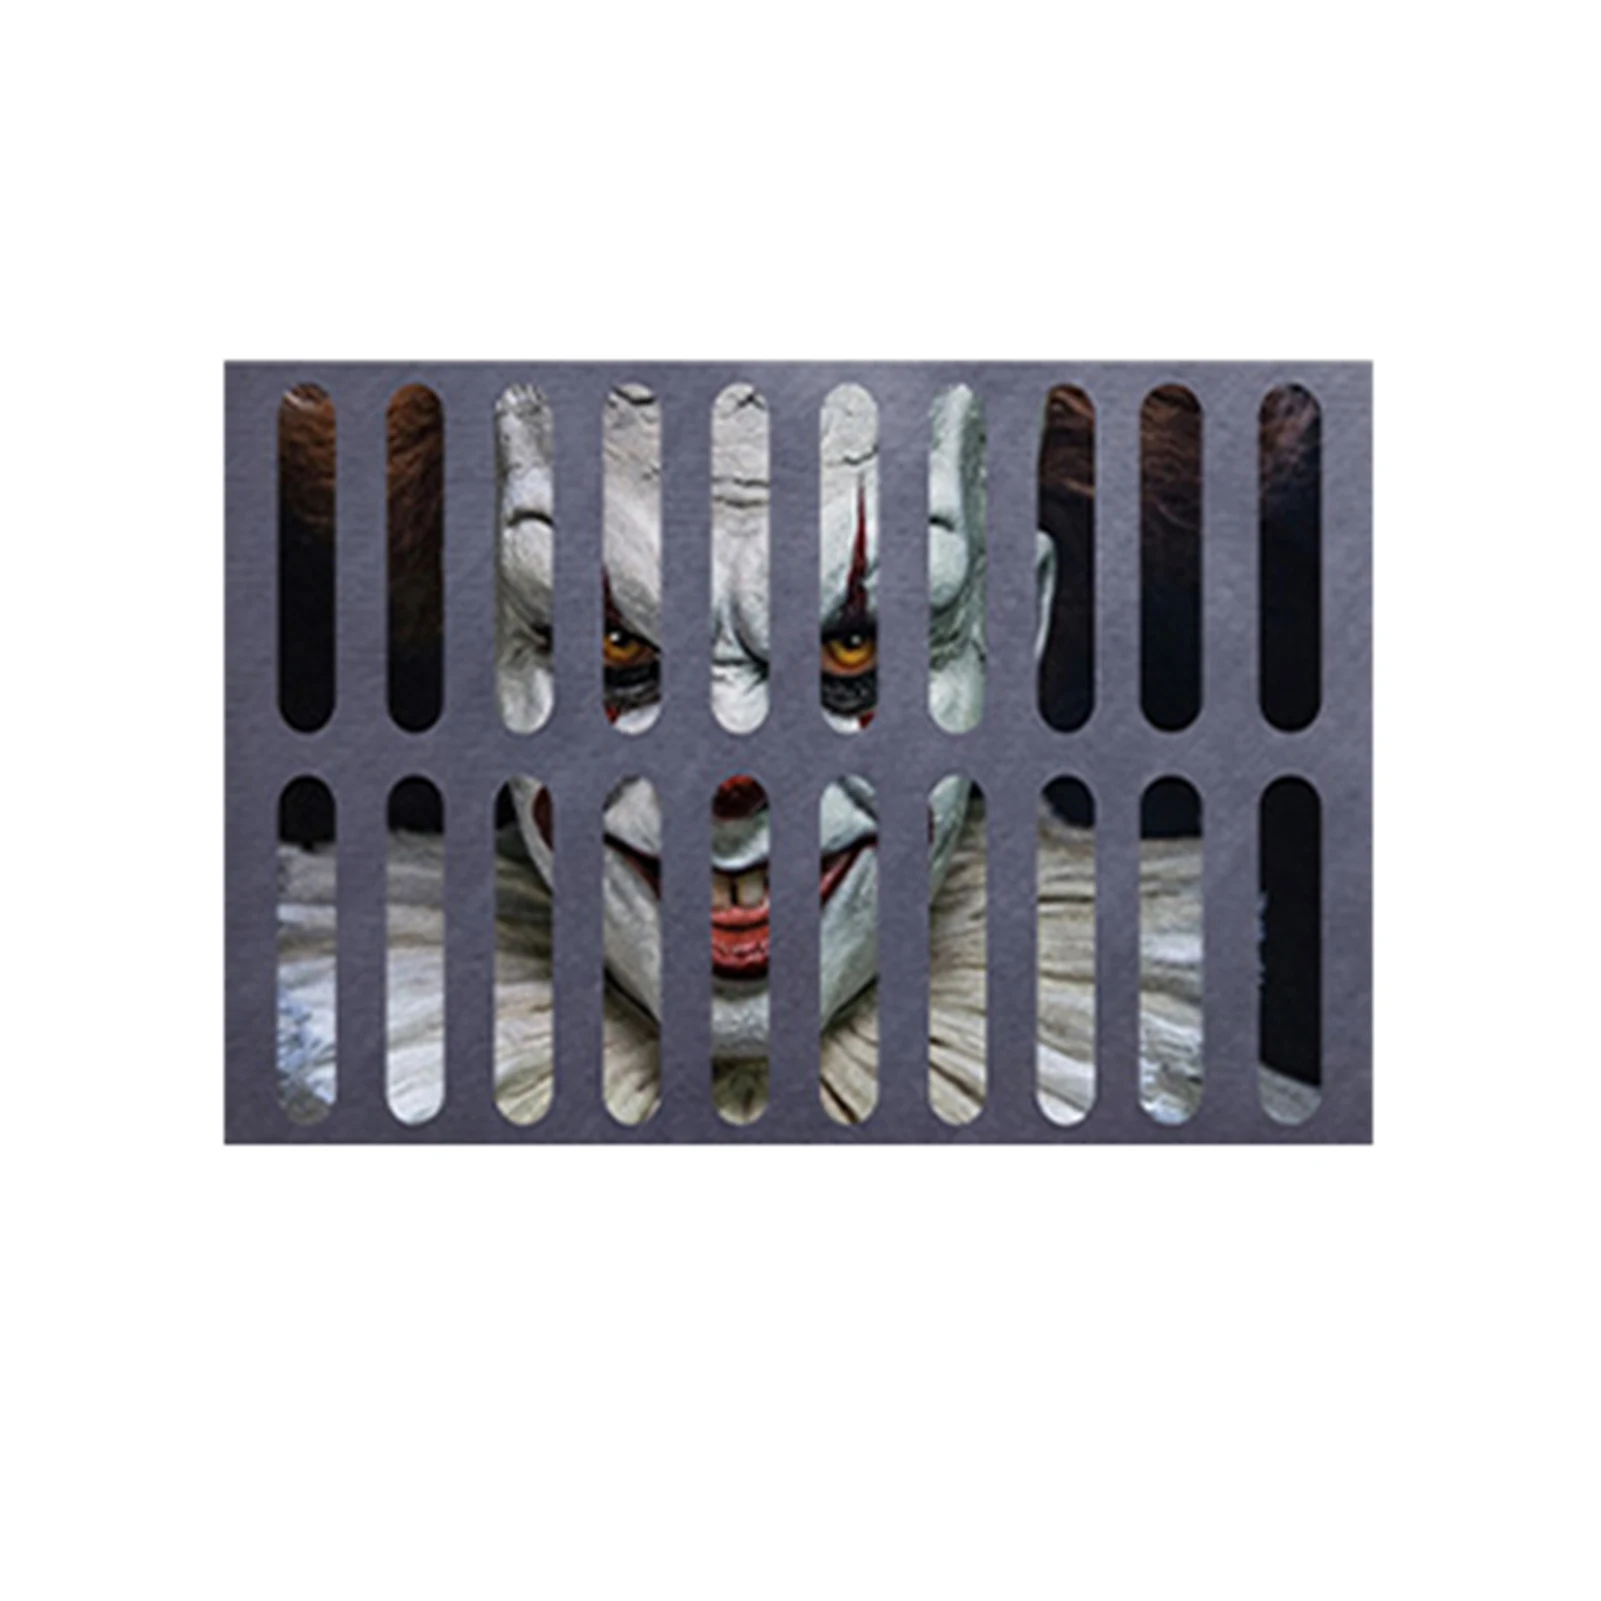 Manhole Cover Clown Carpet Multi-purpose Printed Door Mat Non-Slip Absorbent Pad For Kitchen Bedroom Bathroom halloween skull printed bath mats entrance door mat doormat non slip rugs bathroom room decor kitchen carpet bedroom floor mat